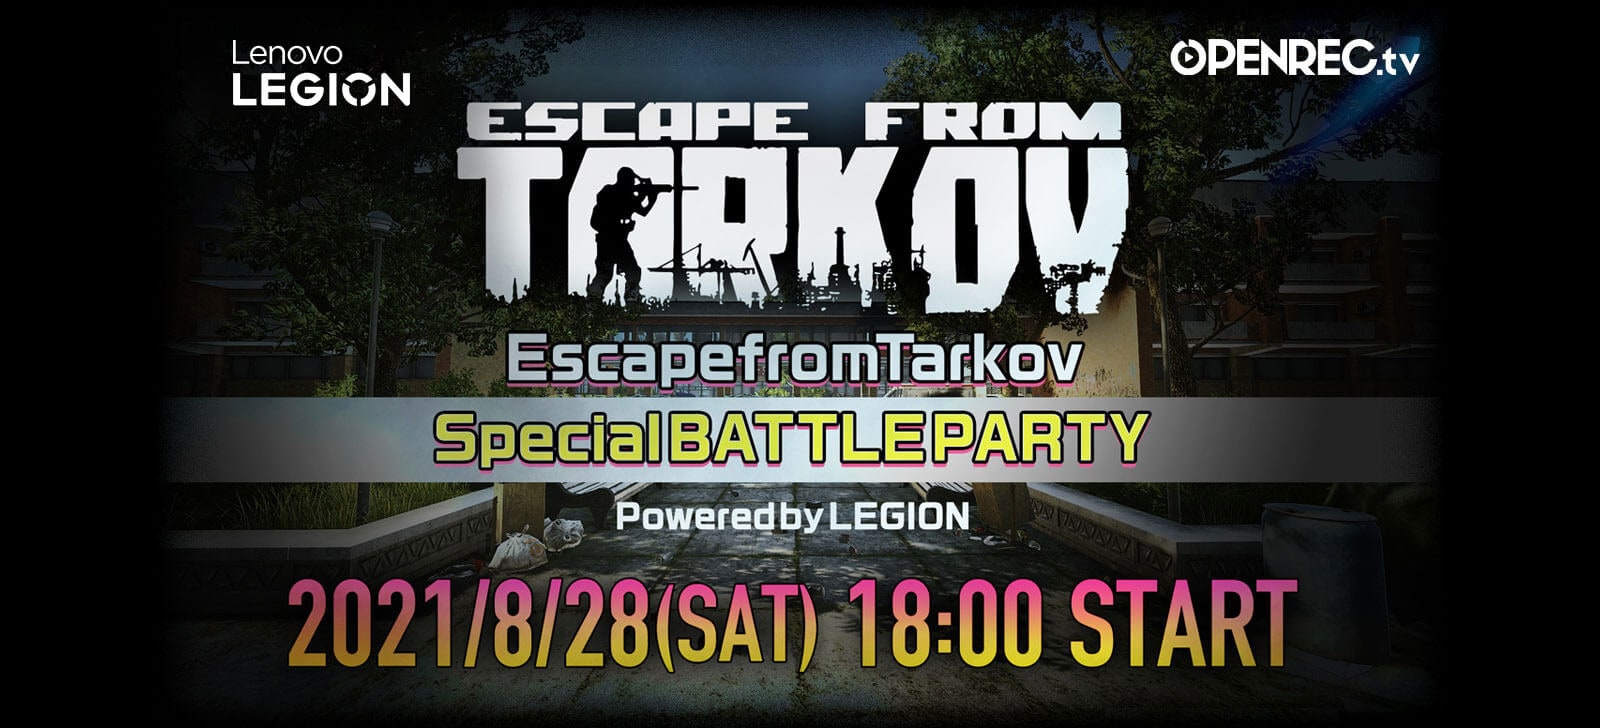 EscapefromTarkov SpecialBATTLEPARTY powered by Legion 2021/8/28(SAT) 18:00 START